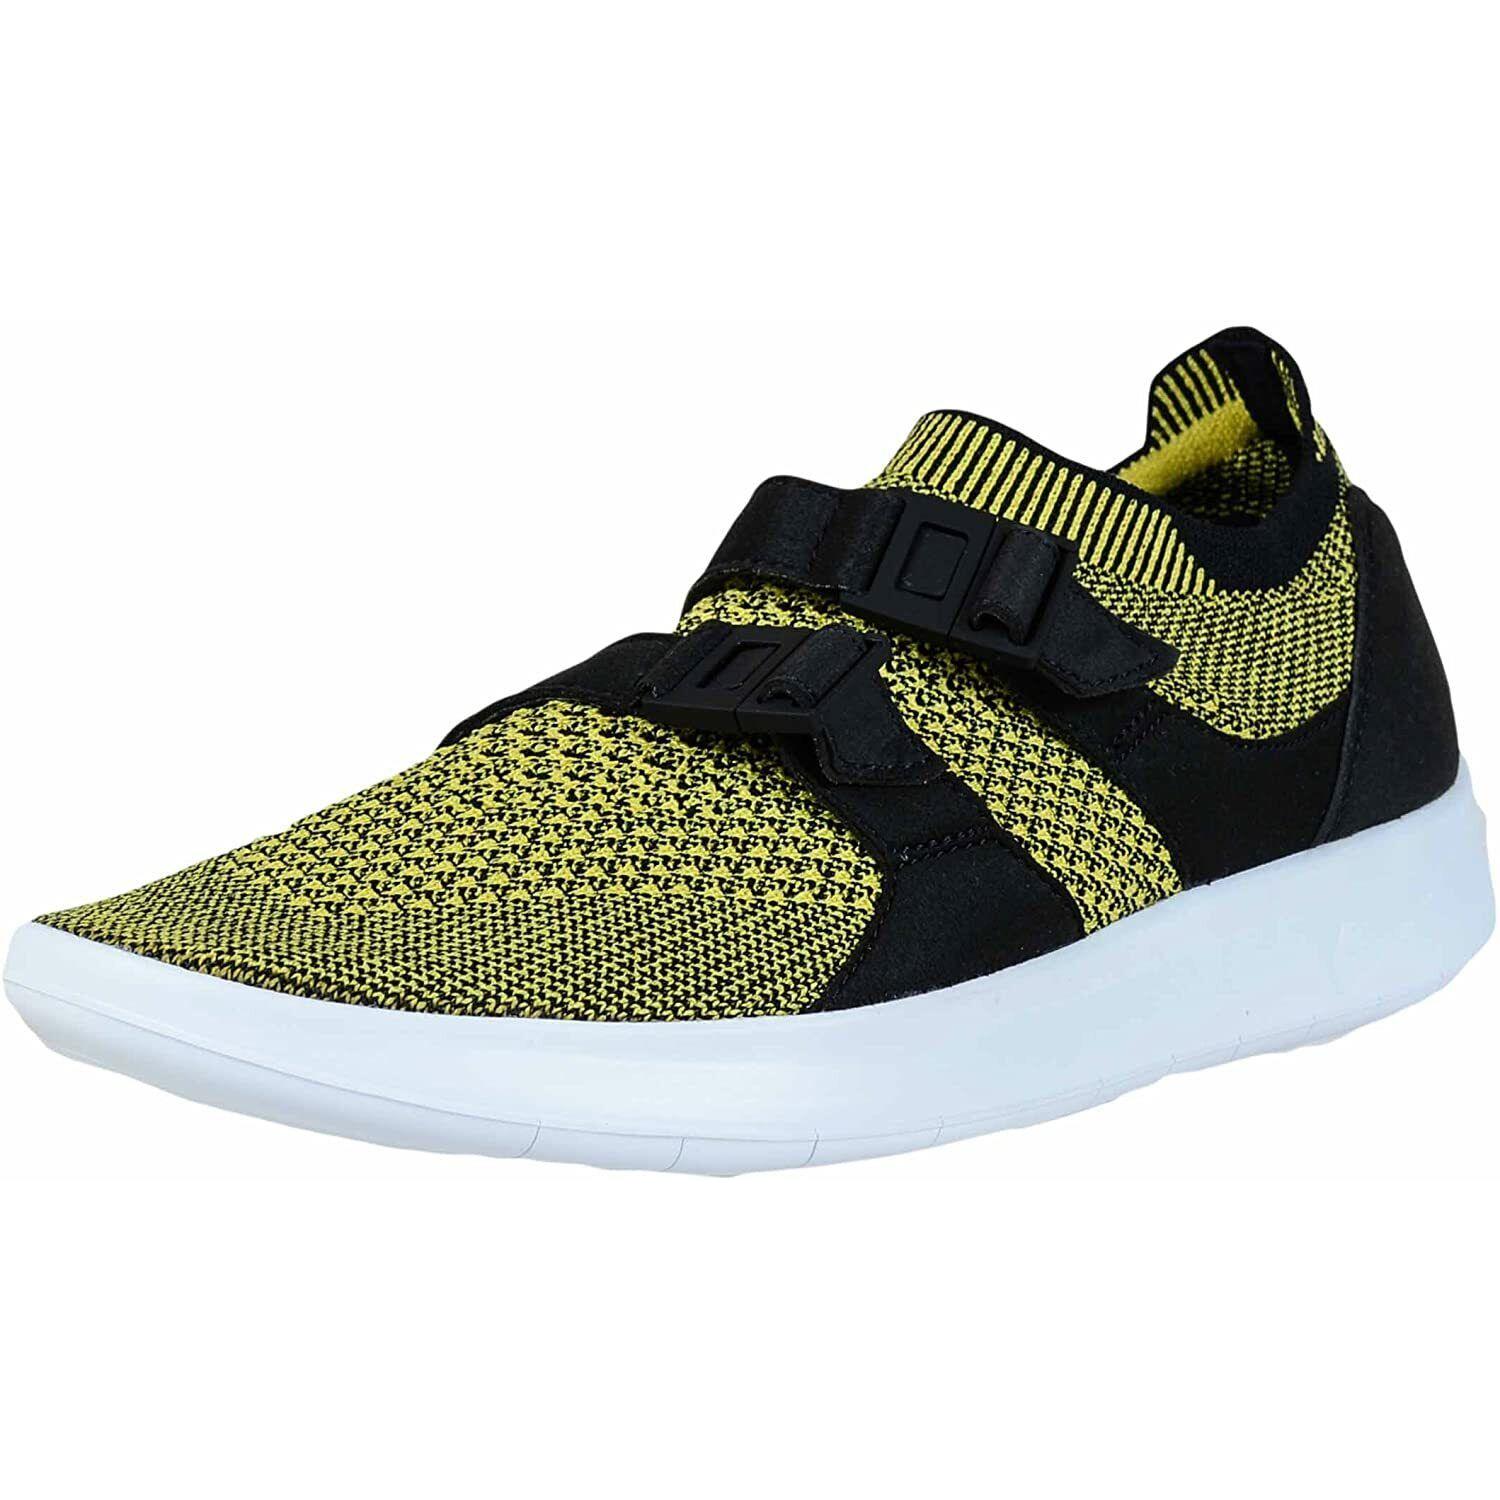 Nike Air Sockracer Flyknit Black/white/yellow Running Shoes Women Size 8